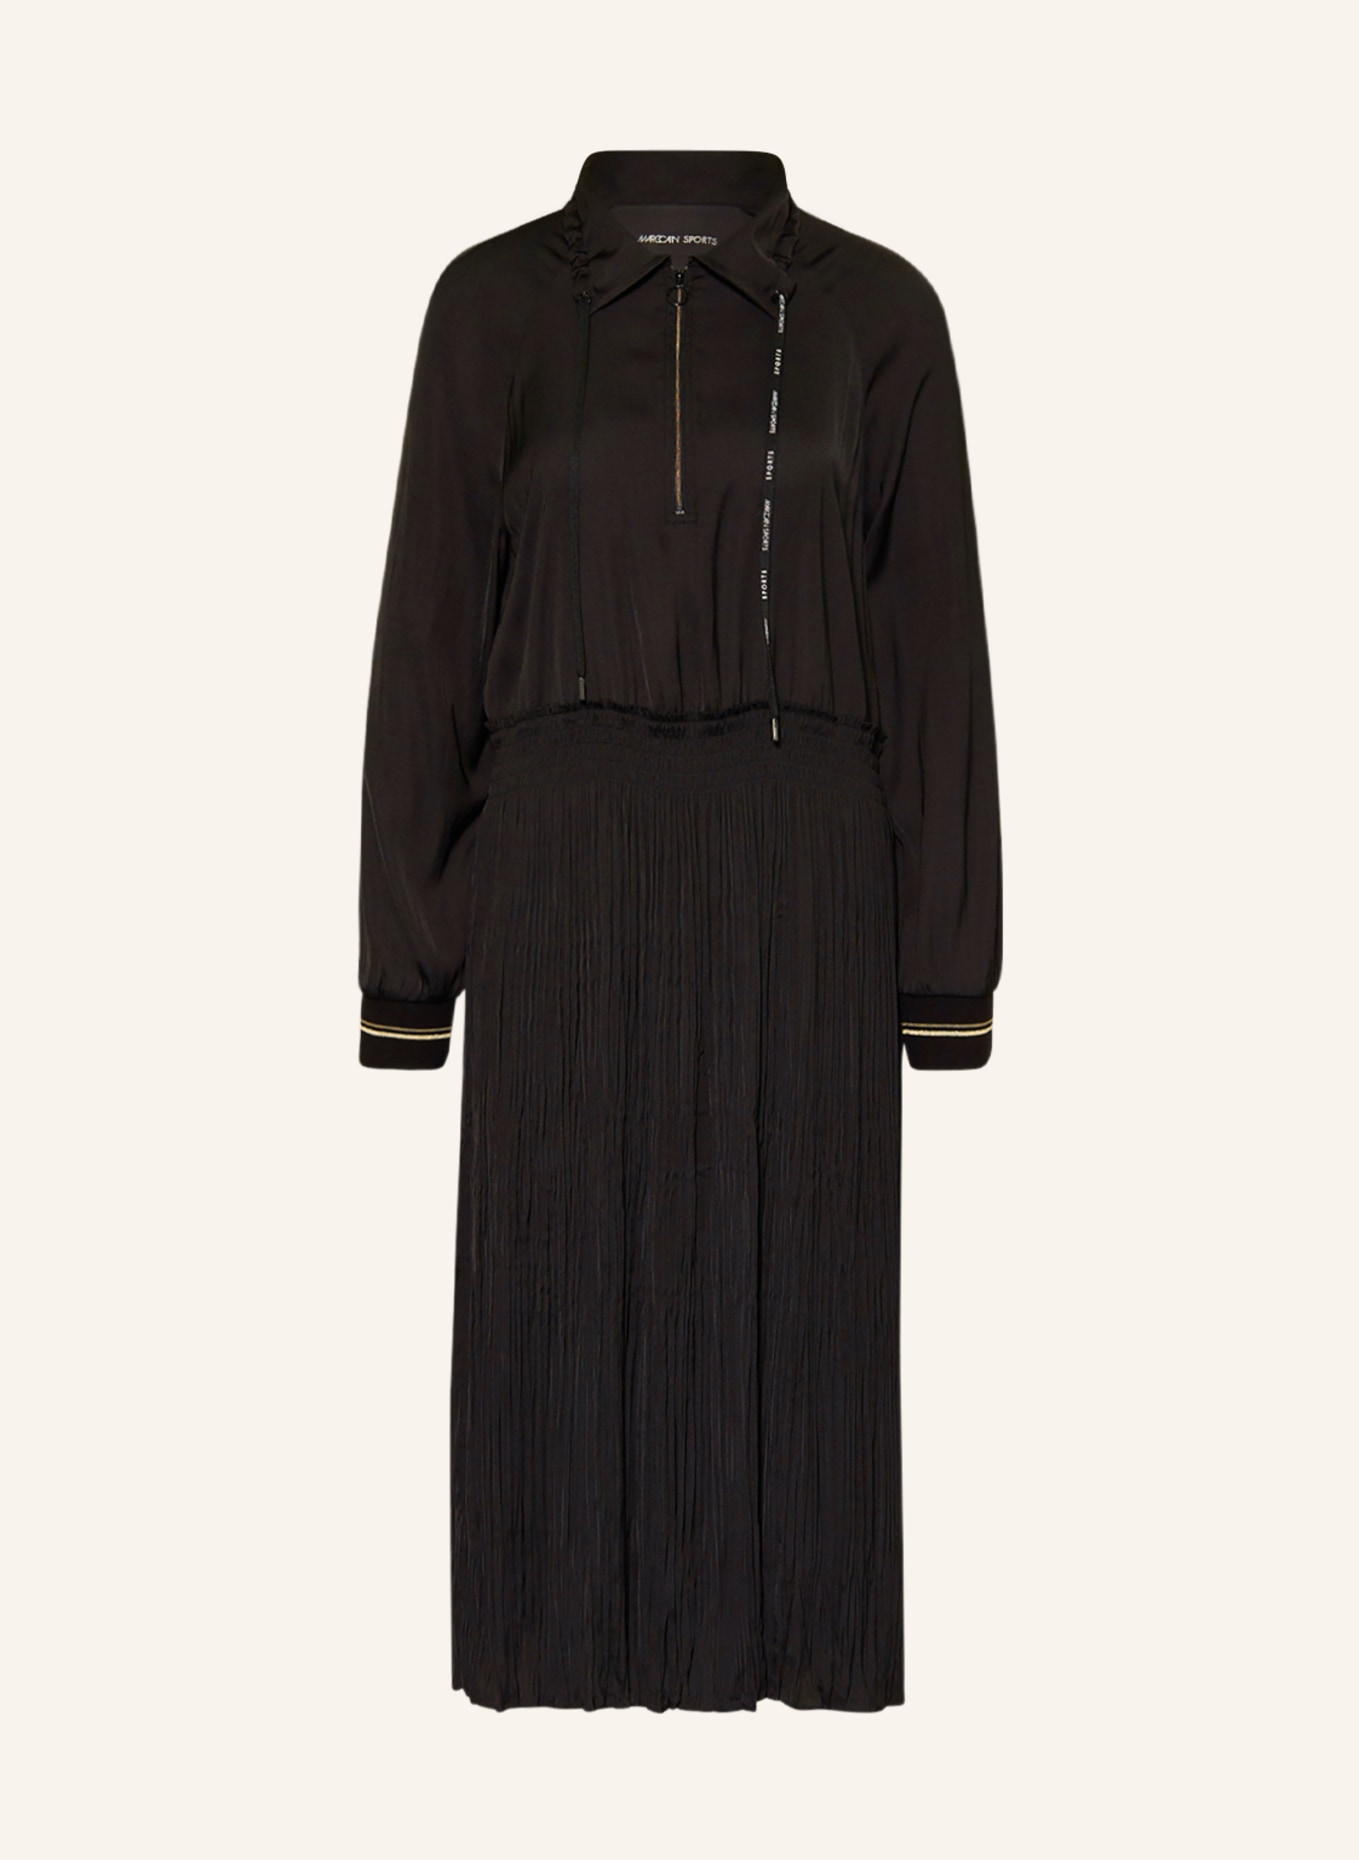 MARC CAIN Kleid mit Plissees, Farbe: 900 BLACK (Bild 1)